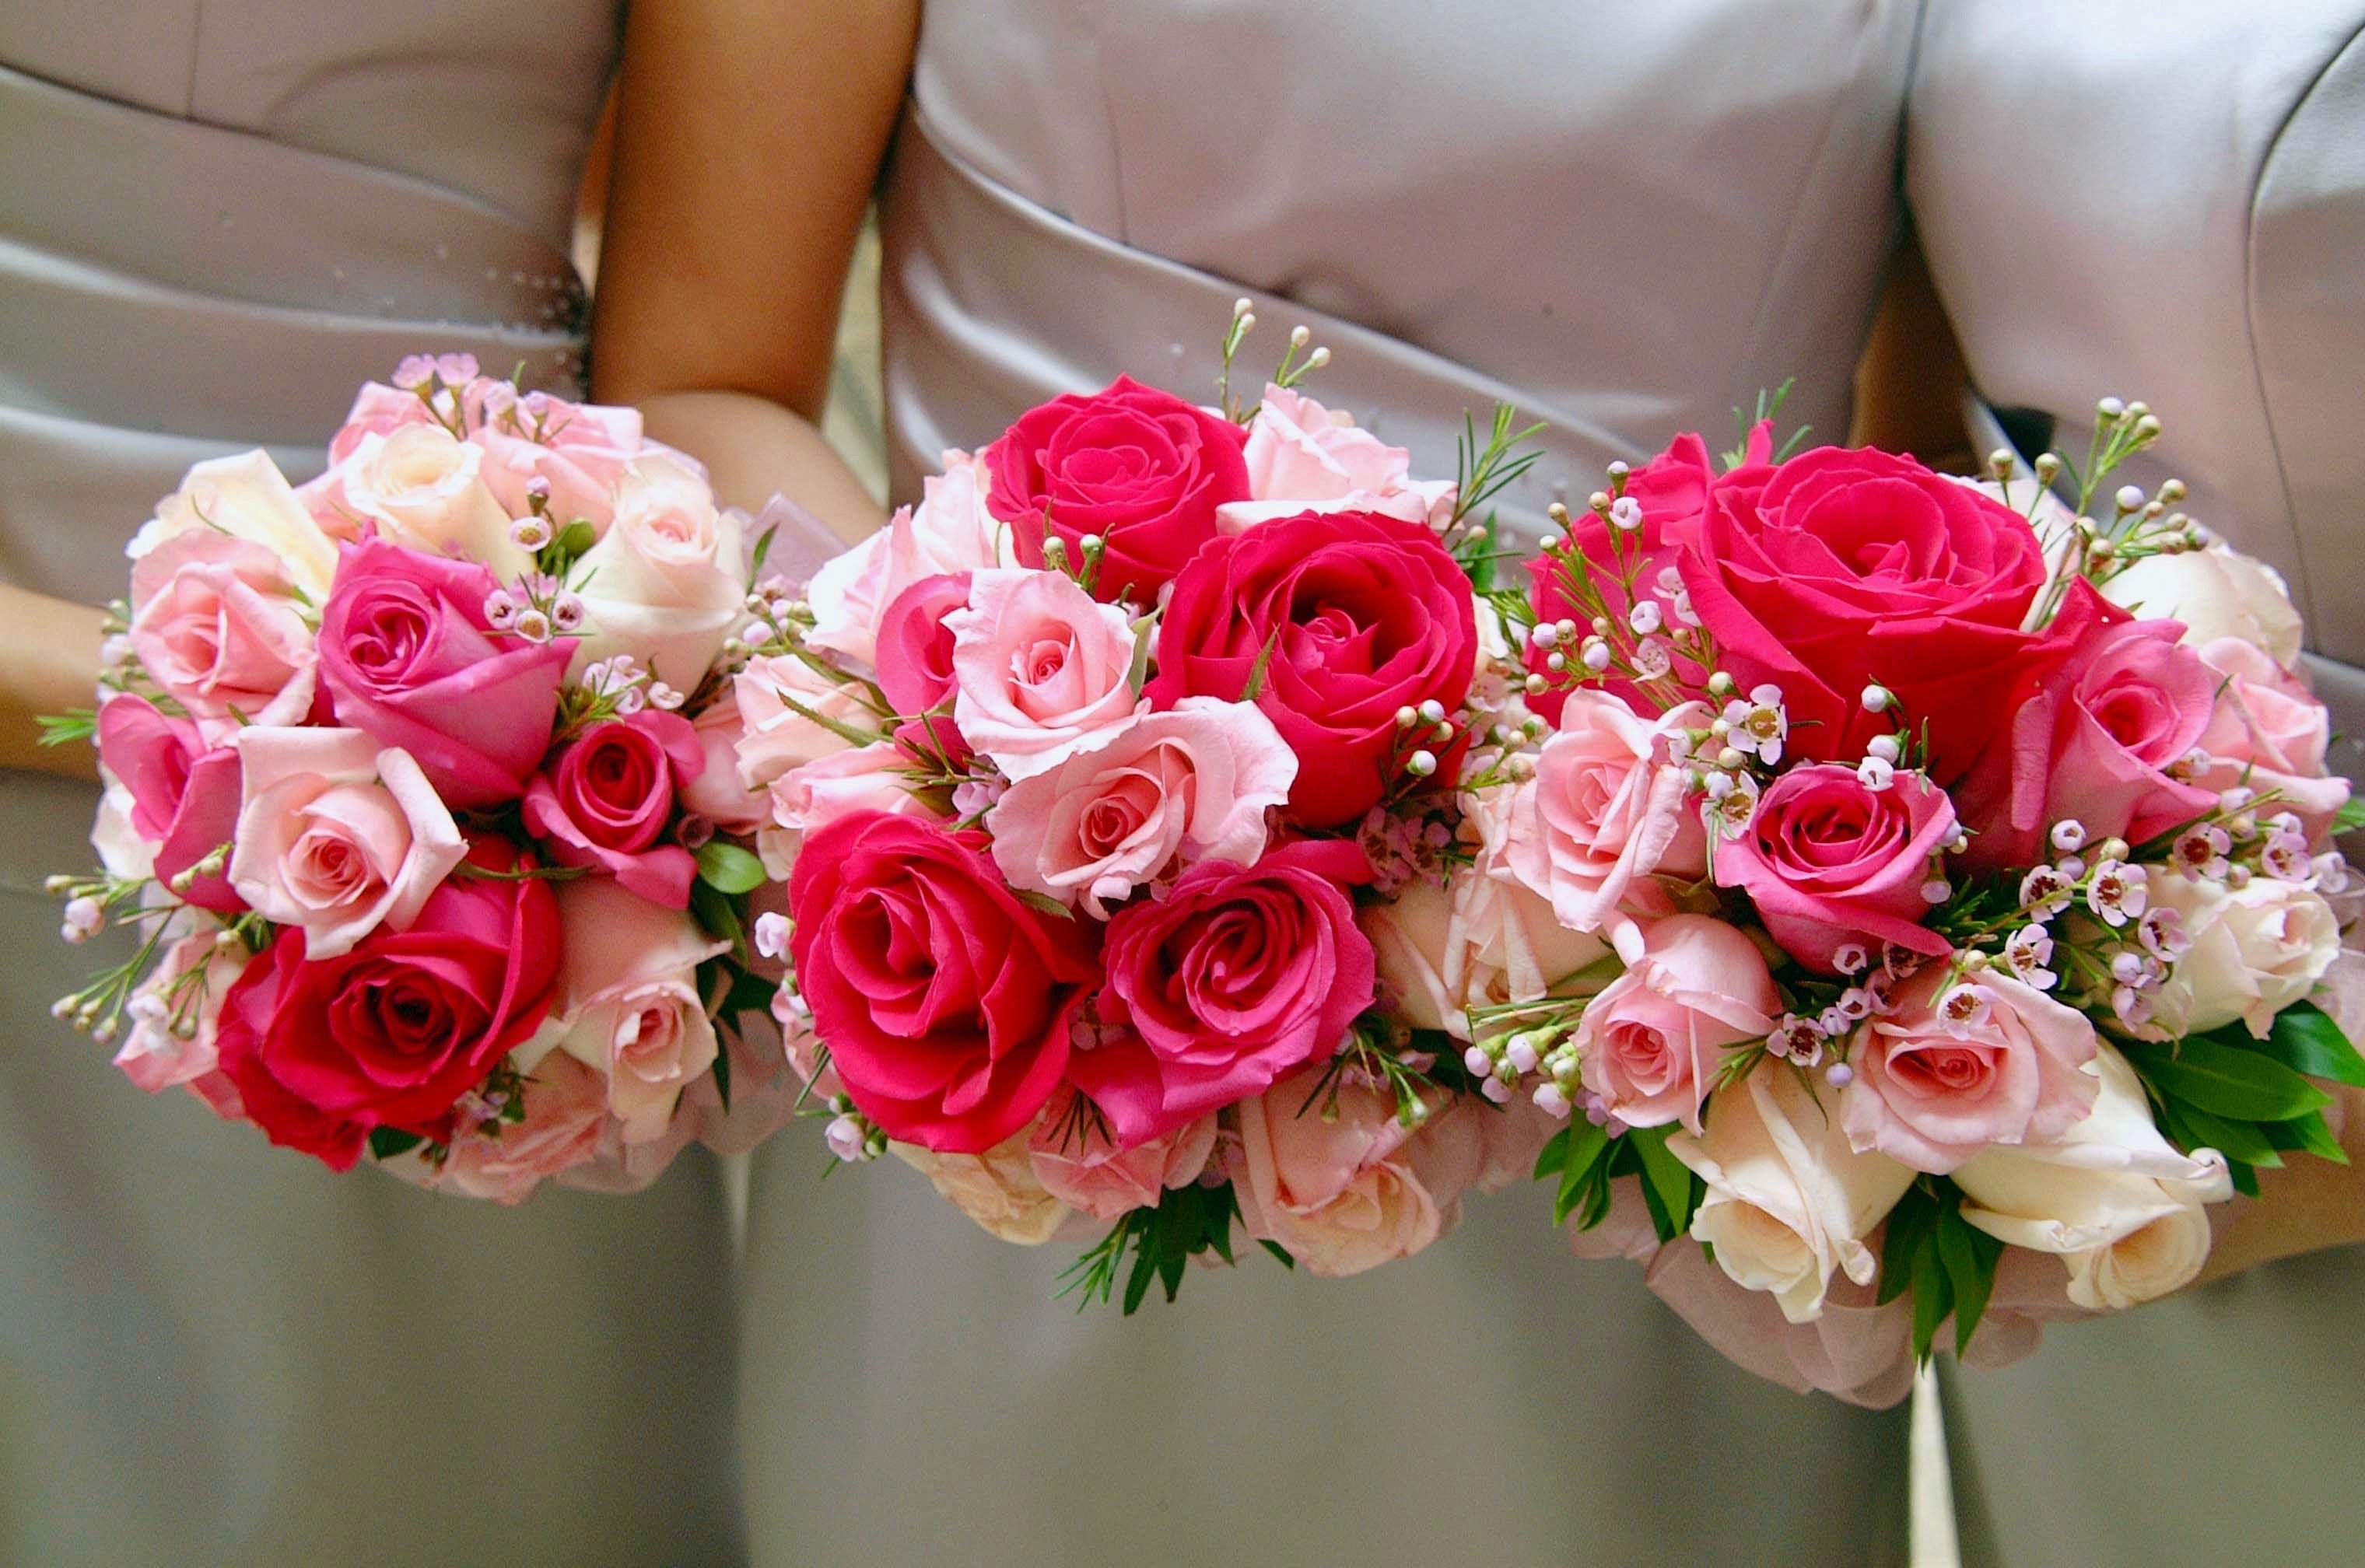 Bridesmaids holding beautiful bouquets. | Source: Pexels